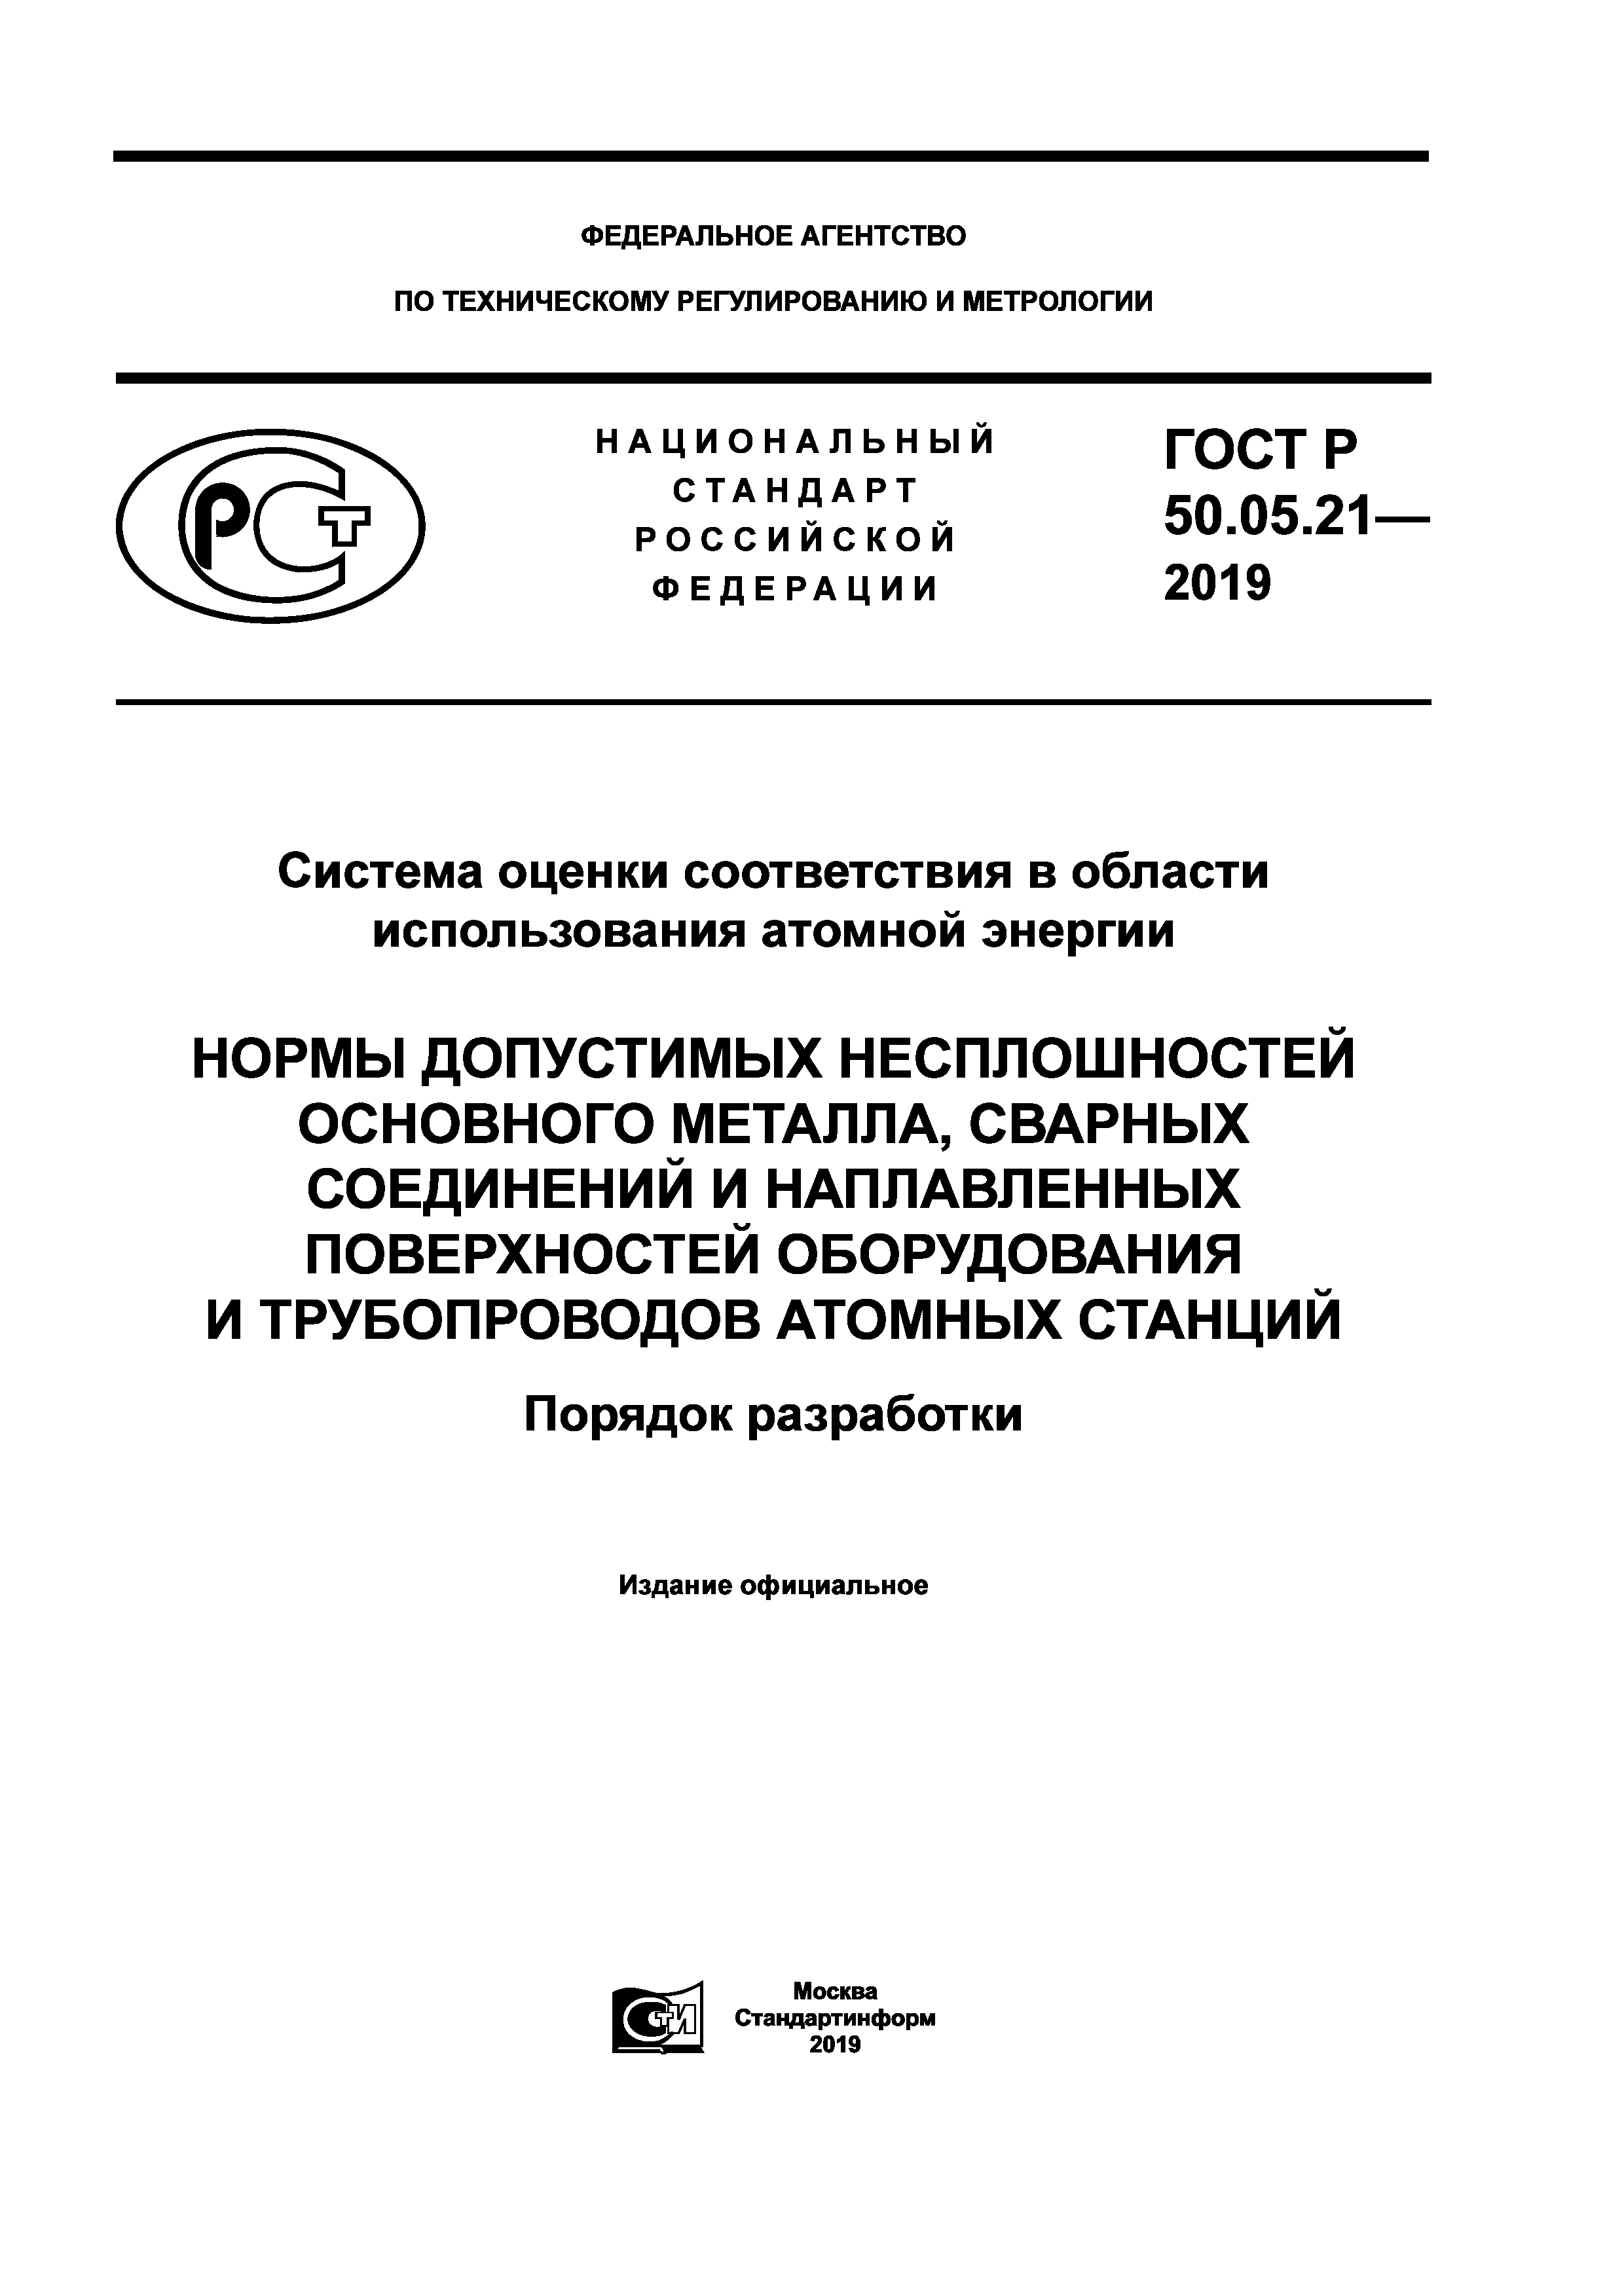 ГОСТ Р 50.05.21-2019